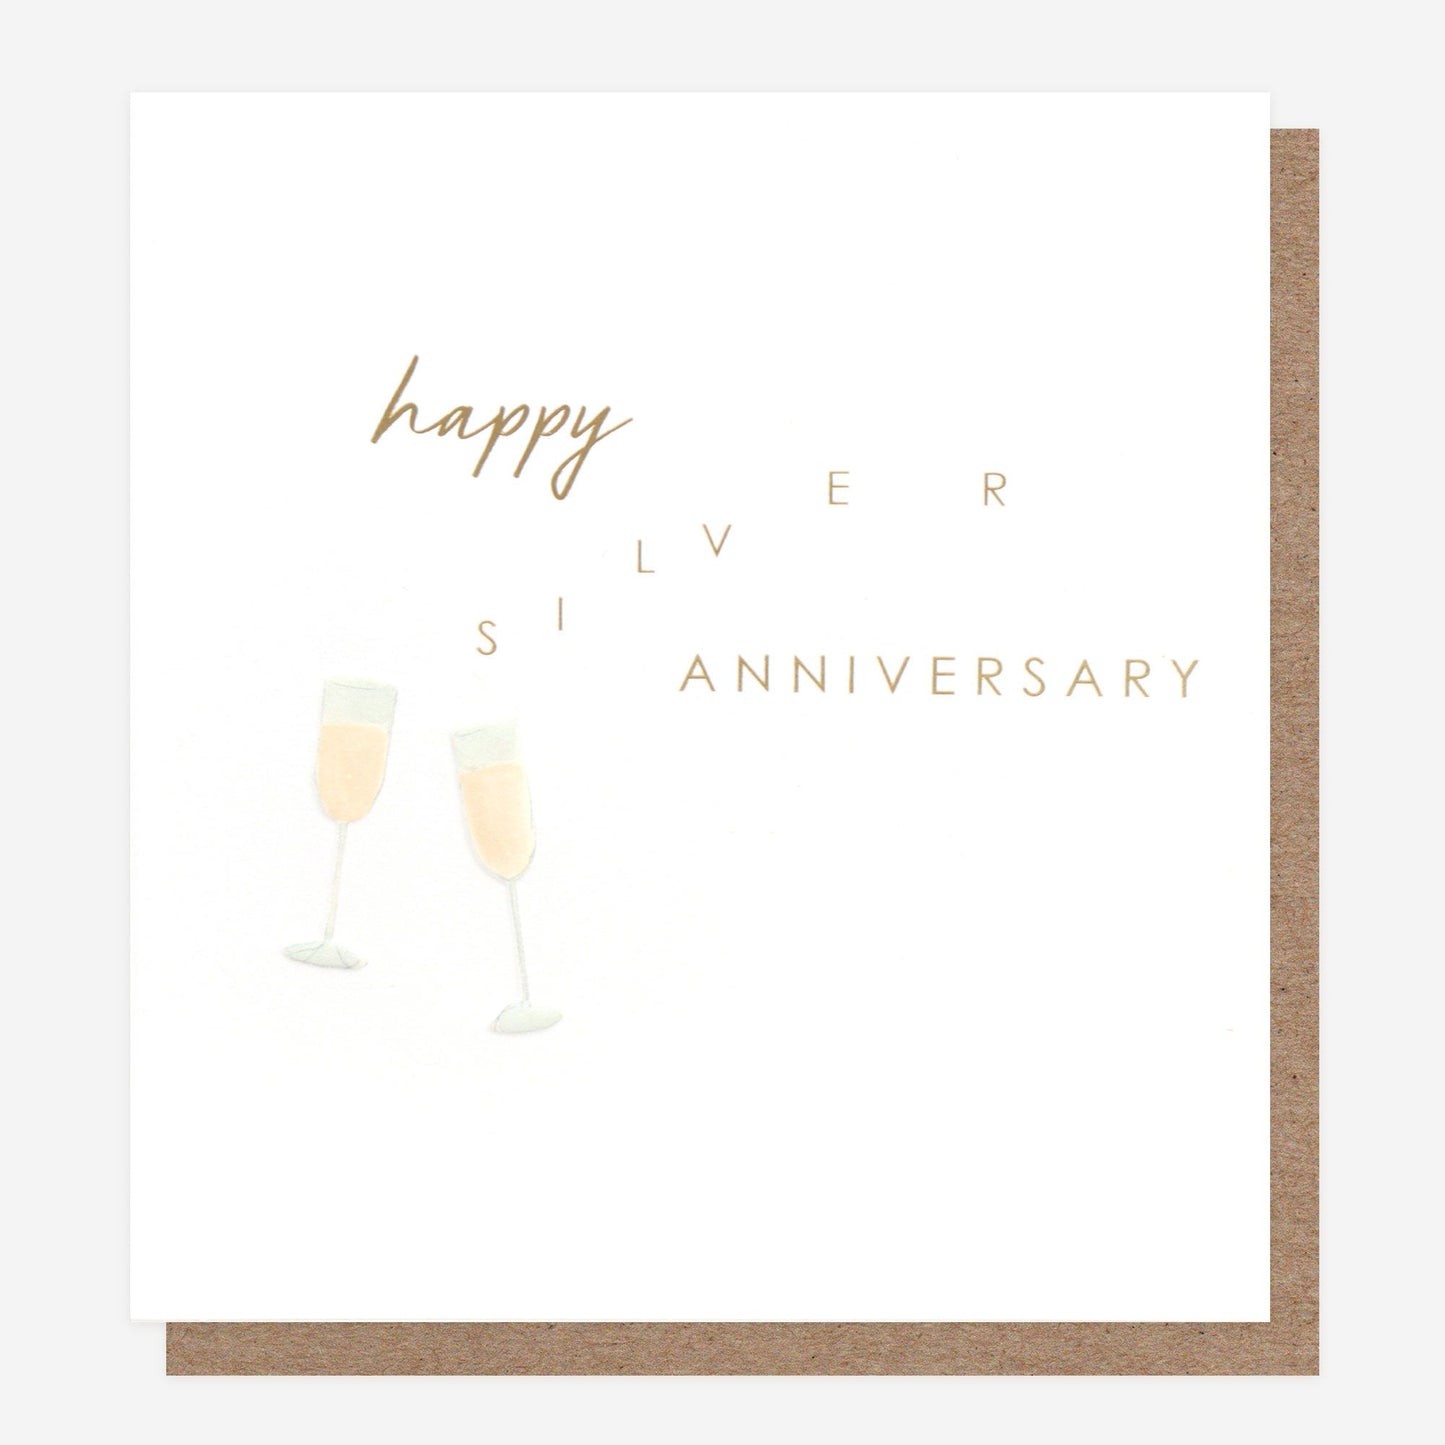 Happy Silver Anniversary - Card